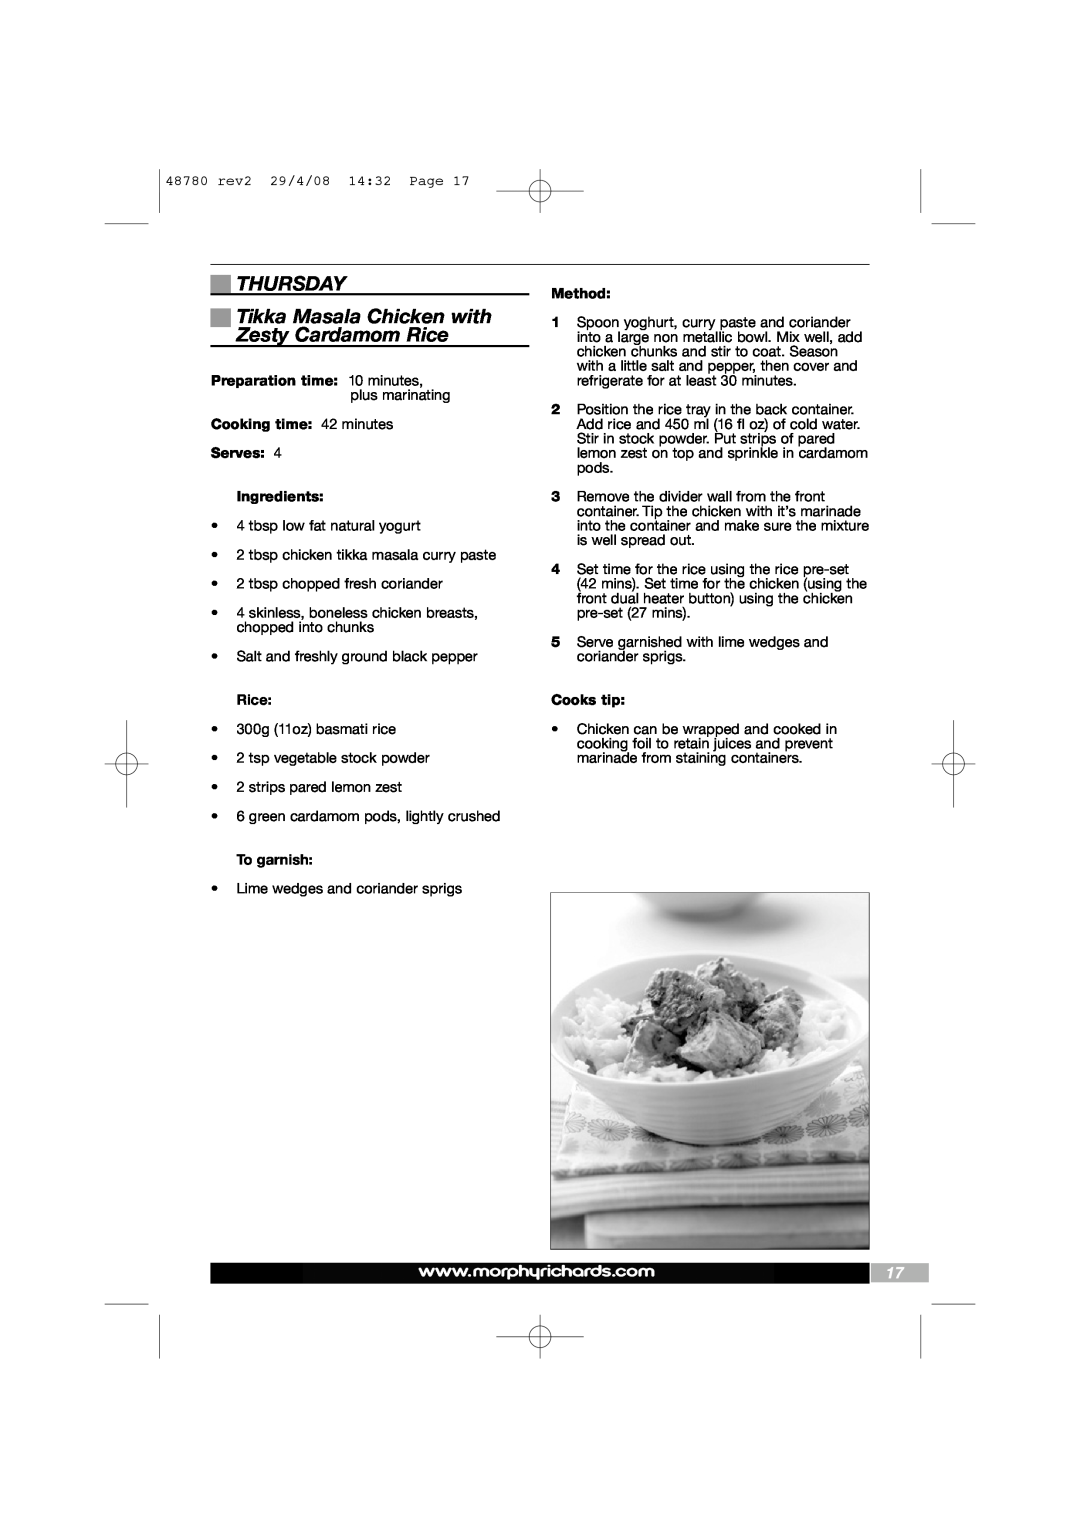 Morphy Richards Intellisteam setup guide THURSDAY Tikka Masala Chicken with Zesty Cardamom Rice, To garnish 